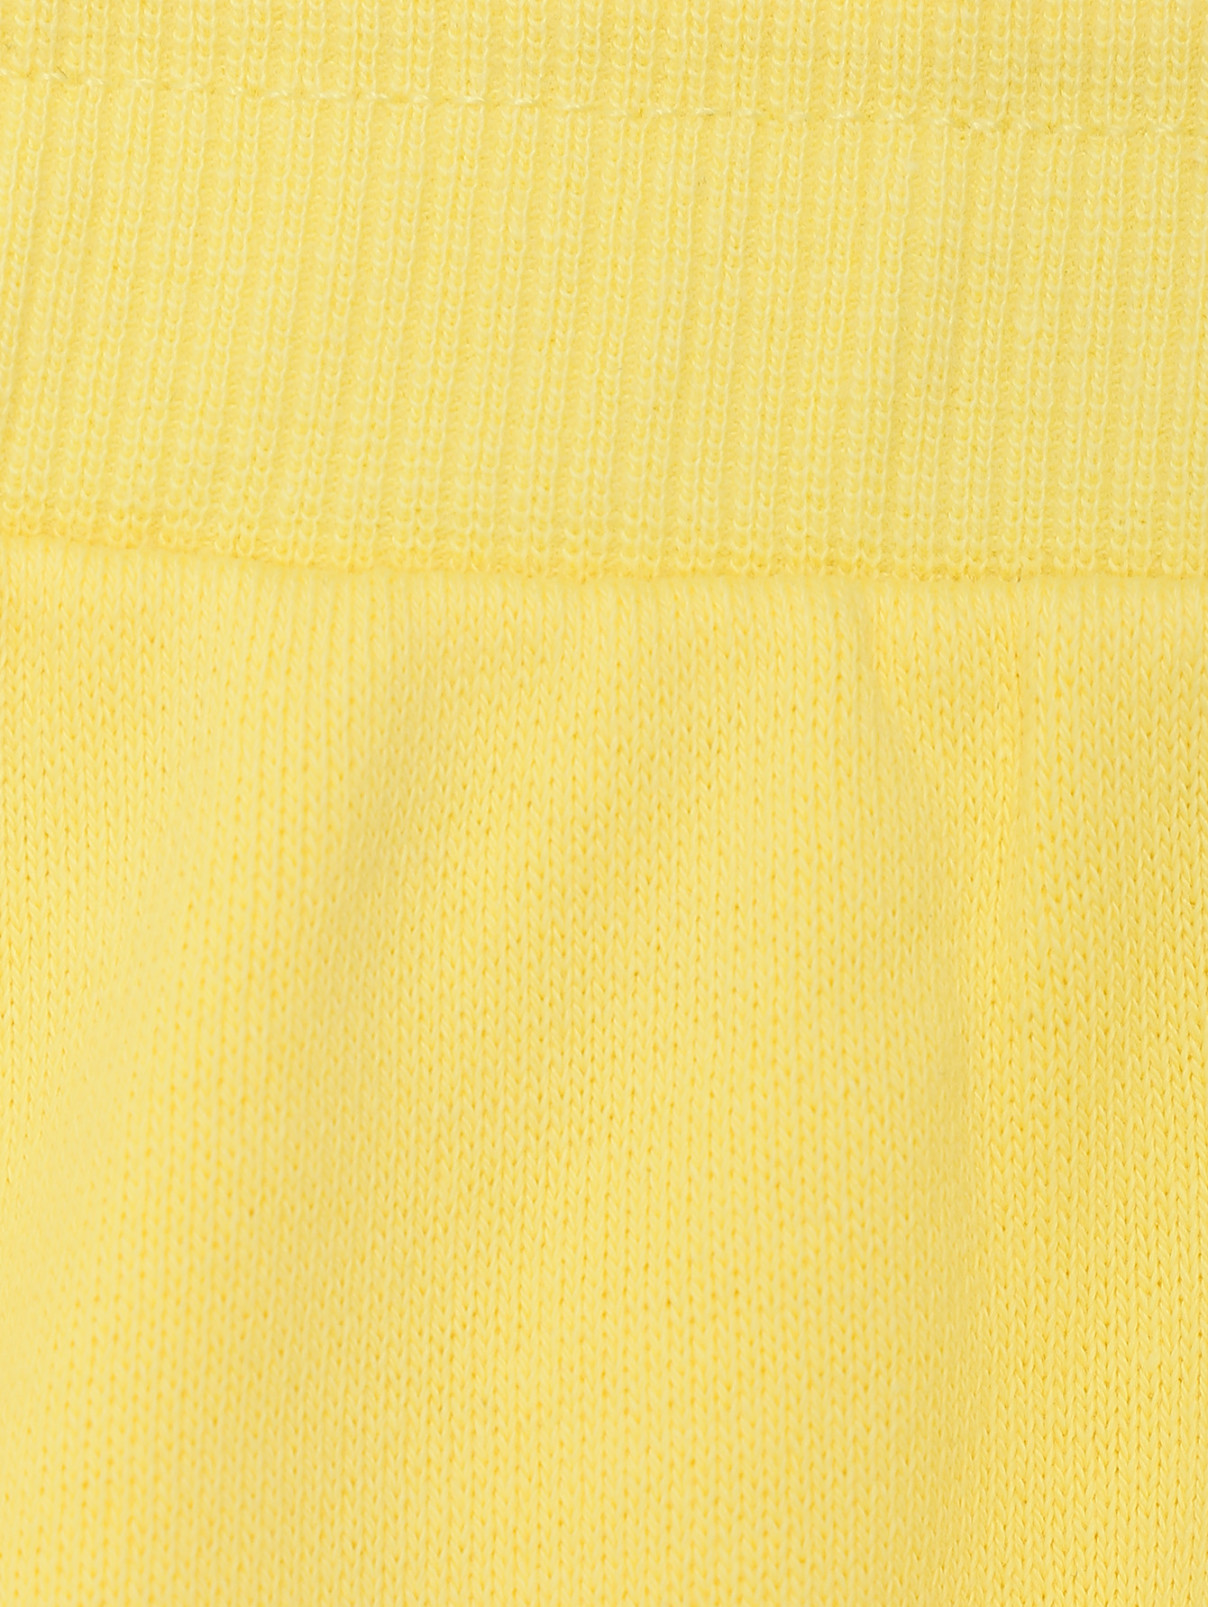 Брюки из хлопка на резинке Weekend Max Mara  –  Деталь1  – Цвет:  Желтый